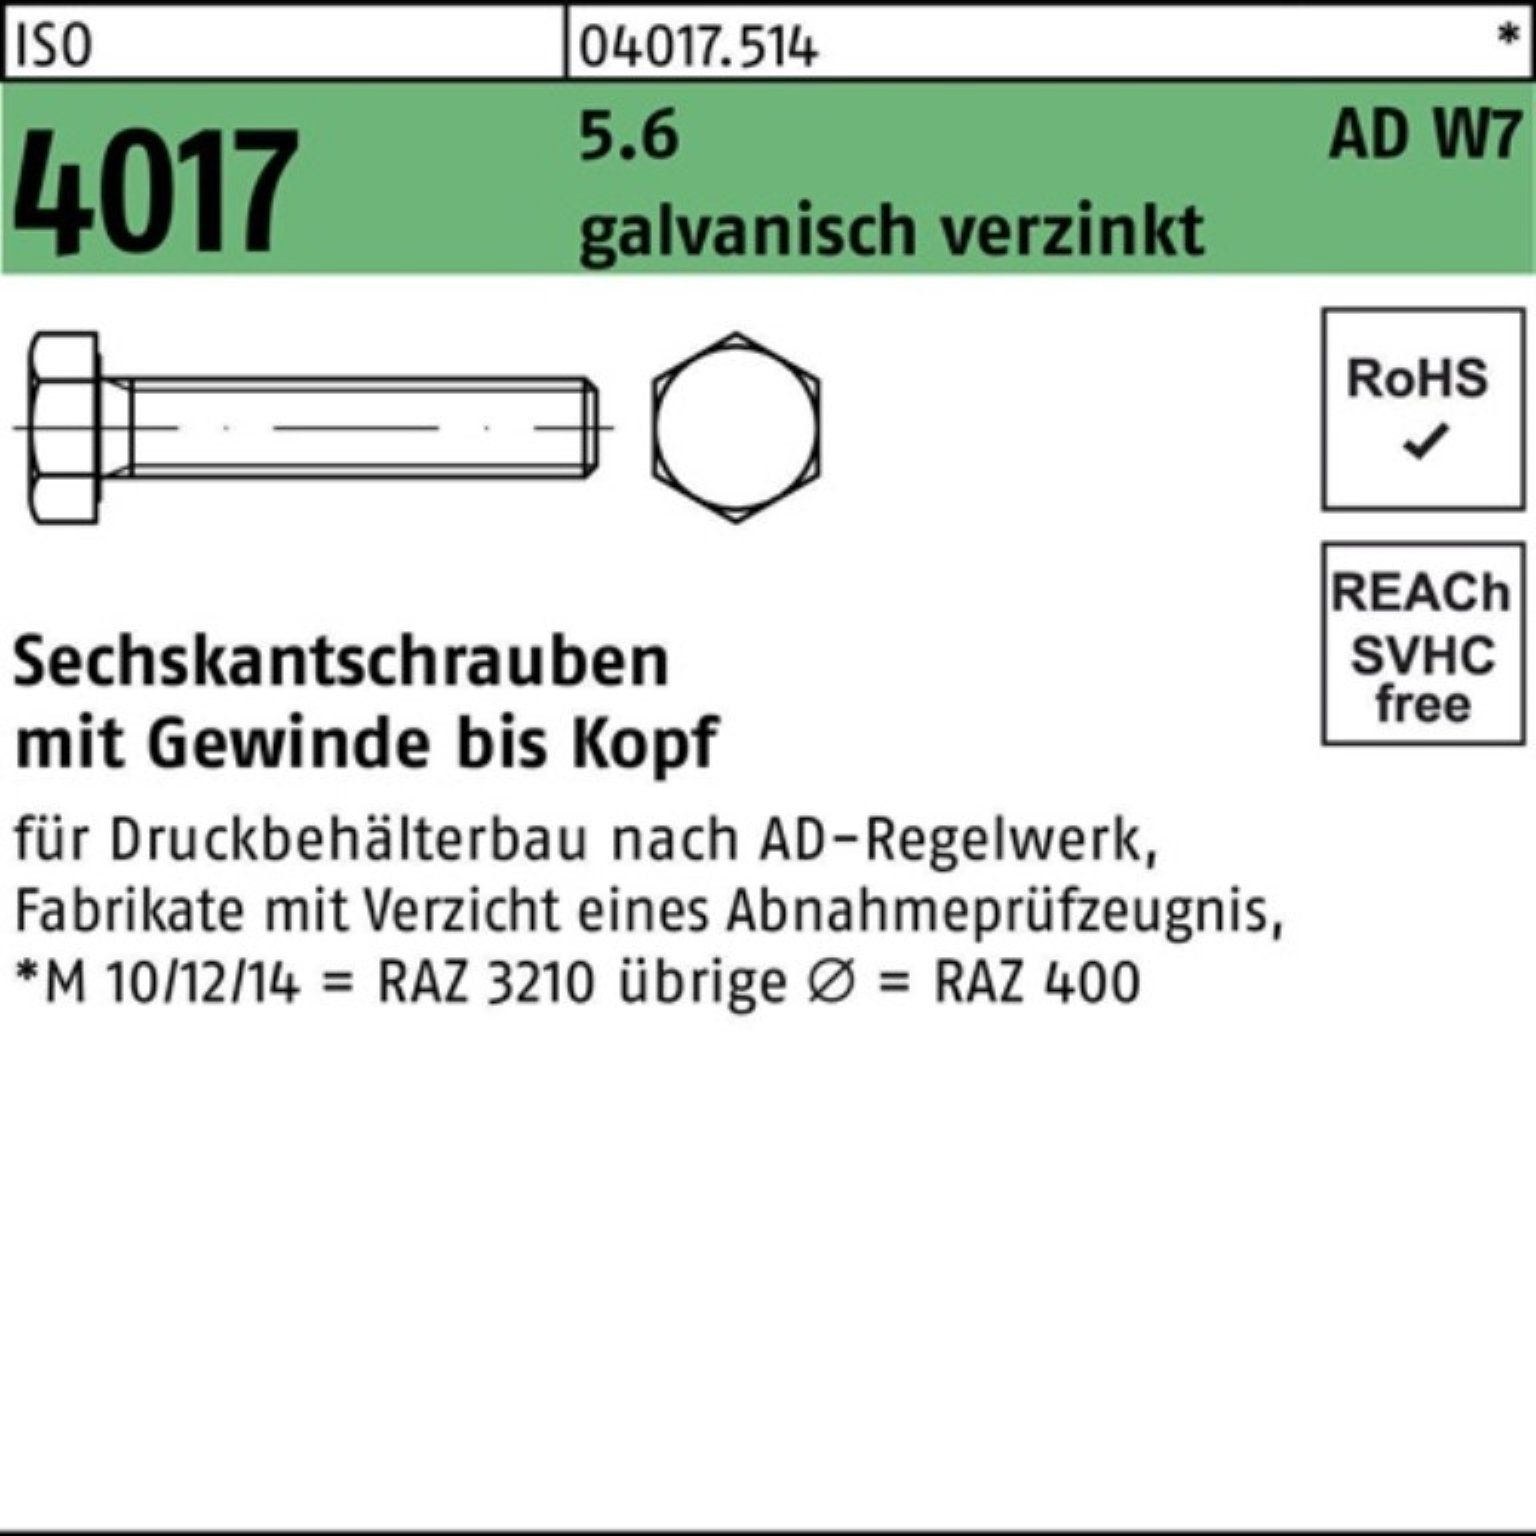 Bufab Sechskantschraube 100er Pack Sechskantschraube galv.verz. M27x 5.6 ISO W7 VG 140 AD 4017